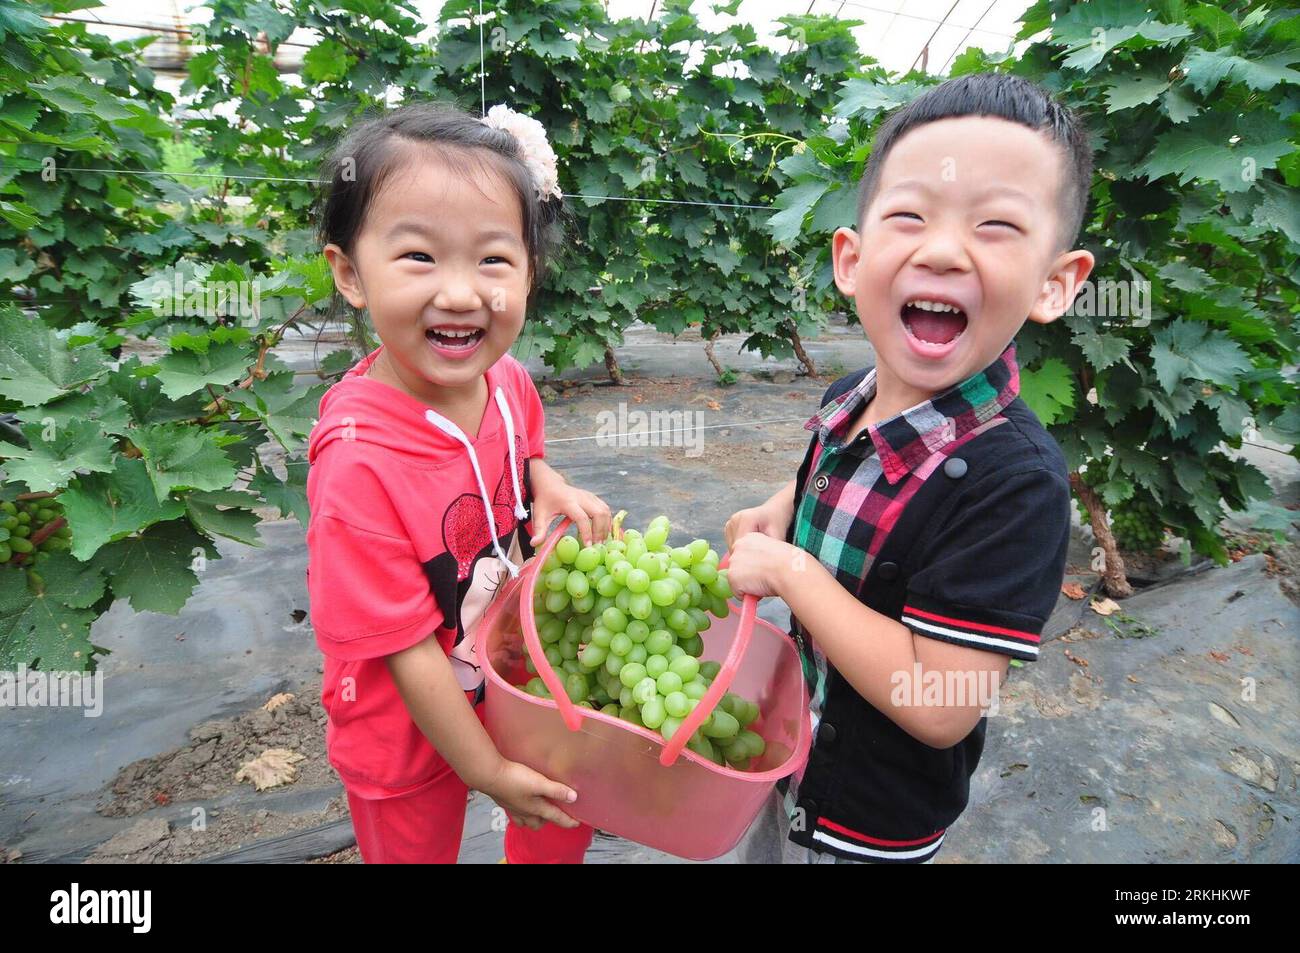 Bildnummer : 55855799 Datum : 30.08.2011 Copyright : imago/Xinhua (110830) -- NING AN, 30 août 2011 (Xinhua) -- deux enfants rient alors qu'ils tiennent des raisins qui viennent d'être cueillis dans une ferme à Ning an, province du Heilongjiang du nord-est de la Chine, 30 août 2011. Local Ning une ferme a organisé un festival de cueillette de raisin donnant aux résidents urbains non seulement des fruits frais, mais aussi une véritable expérience agricole. (Xinhua/Zhang Chunxiang) (cxy) #CHINA-HEILONGJIANG-NING AN-GRAPE PICK (CN) PUBLICATIONxNOTxINxCHN Gesellschaft Wirtschaft Landwirtschaft Weinanbau xda 2011 quer o0 Wein, Anbau, Ernte, Lese, Weinlese, Weinlese, Kind, Freude Bildnummer 55855799 Banque D'Images